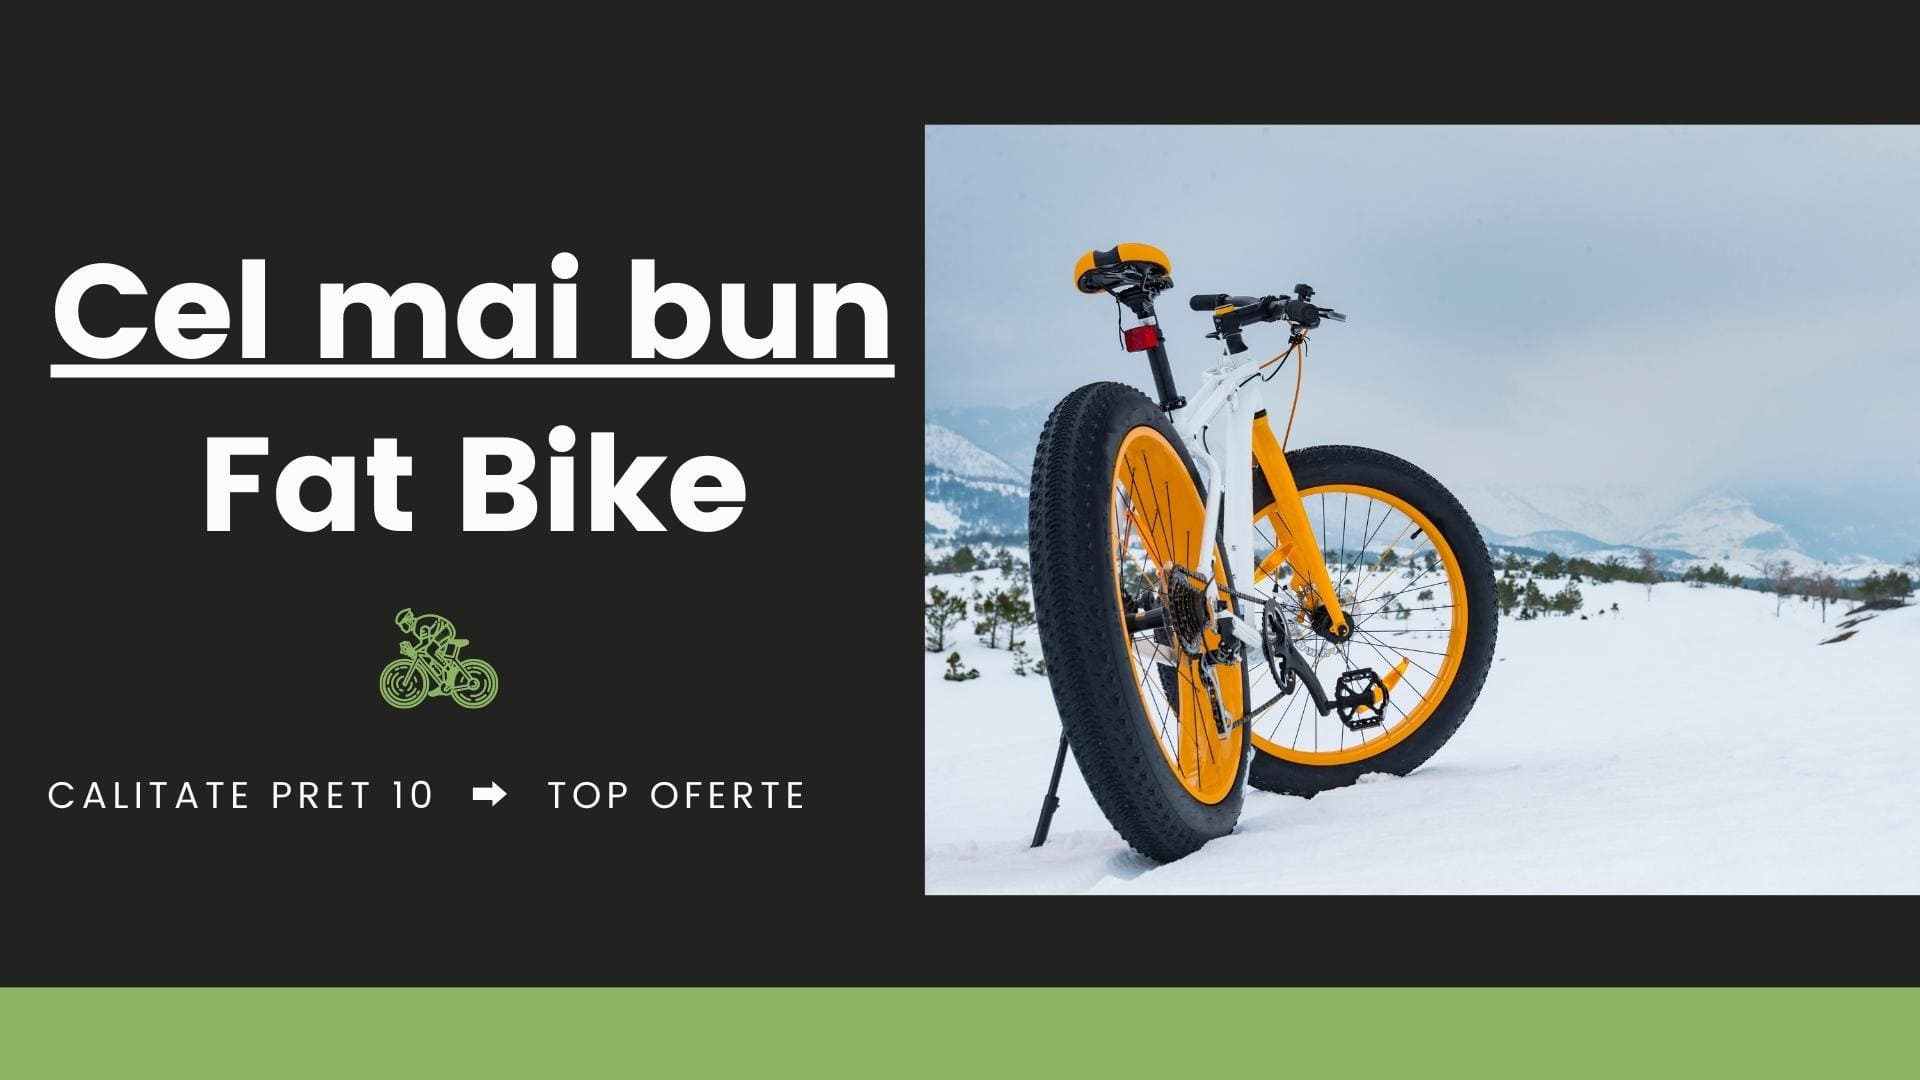 Exclusion conductor bias Bicicleta cu Roti Groase sau Fat Bike Electric Ieftin? Top MTB